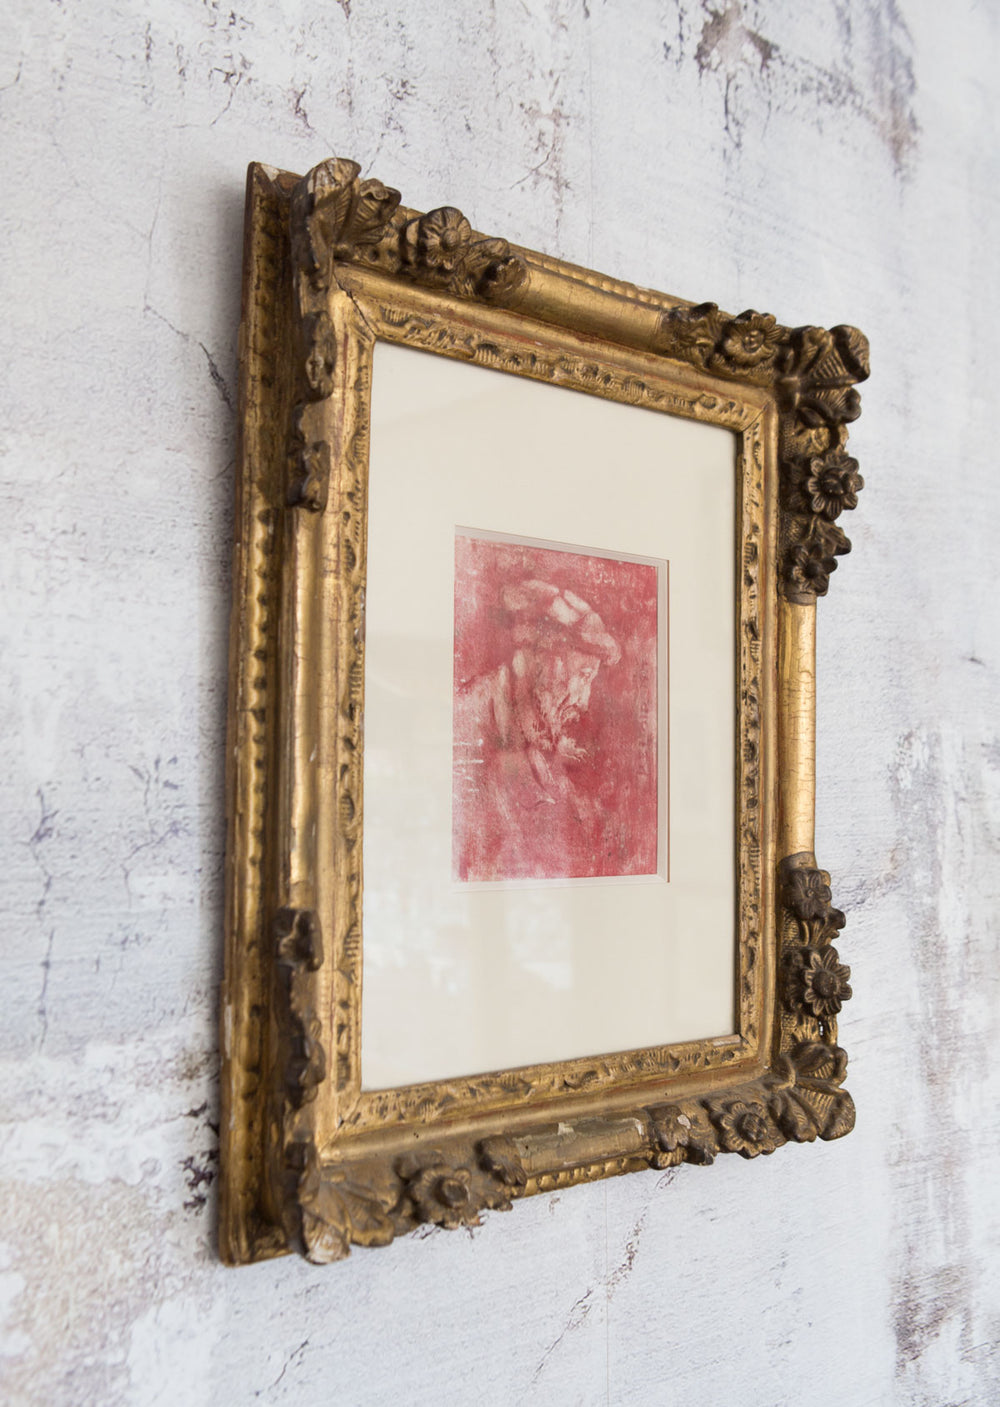 Retrato de Renoir. Grabado monotipo Richard Guino (VENDIDO)